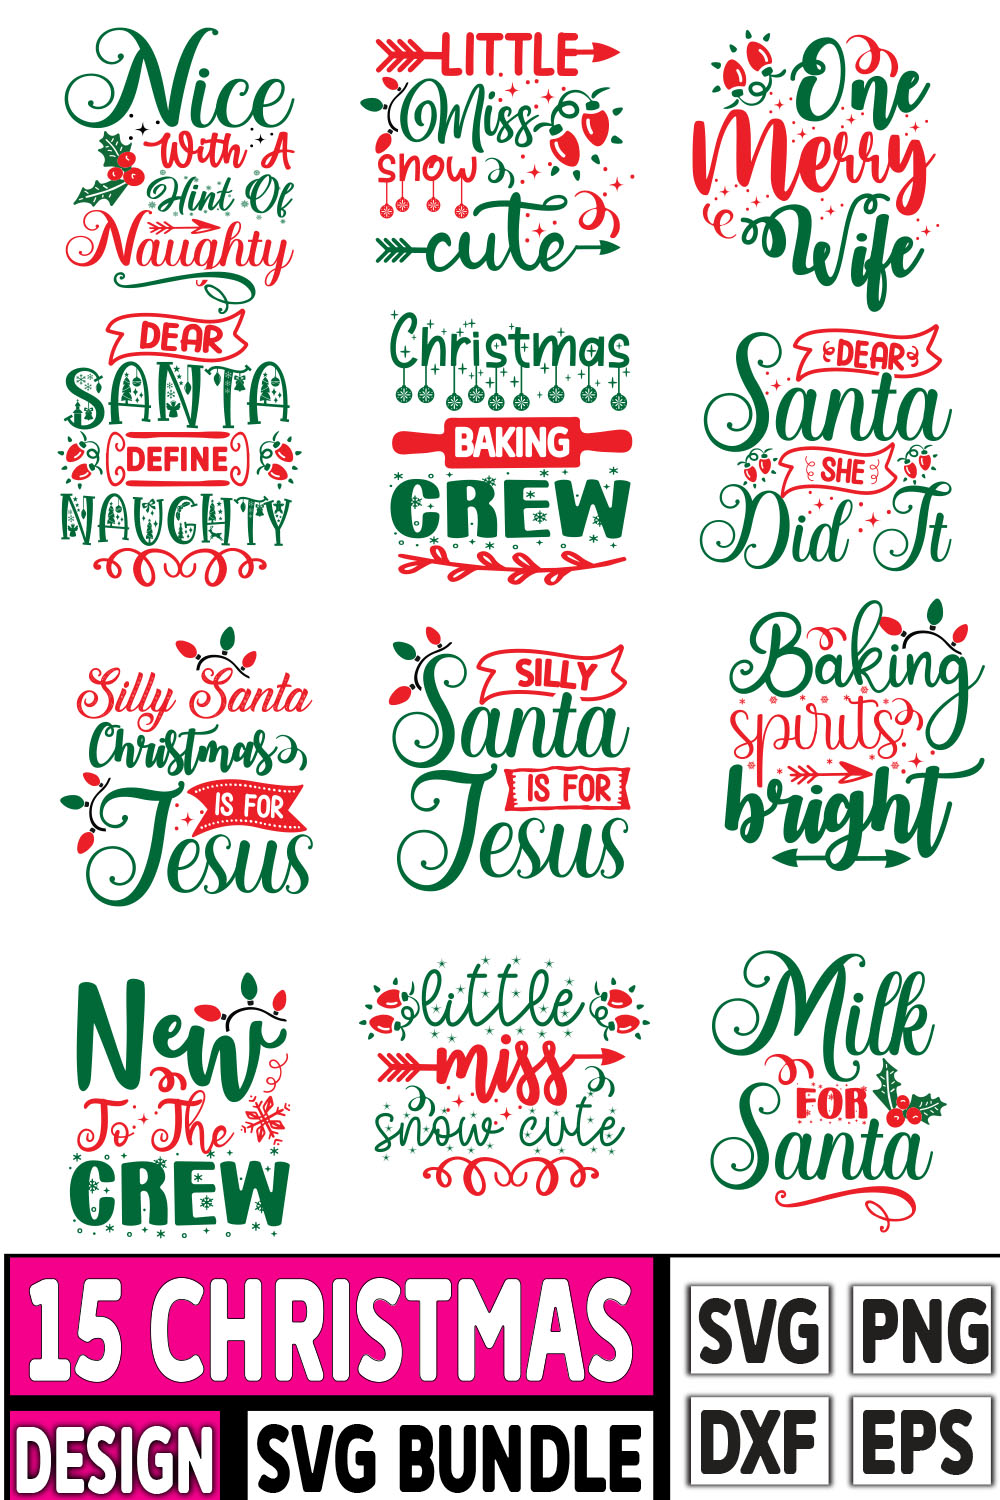 Christmas Quotes SVG Design pinterest image.